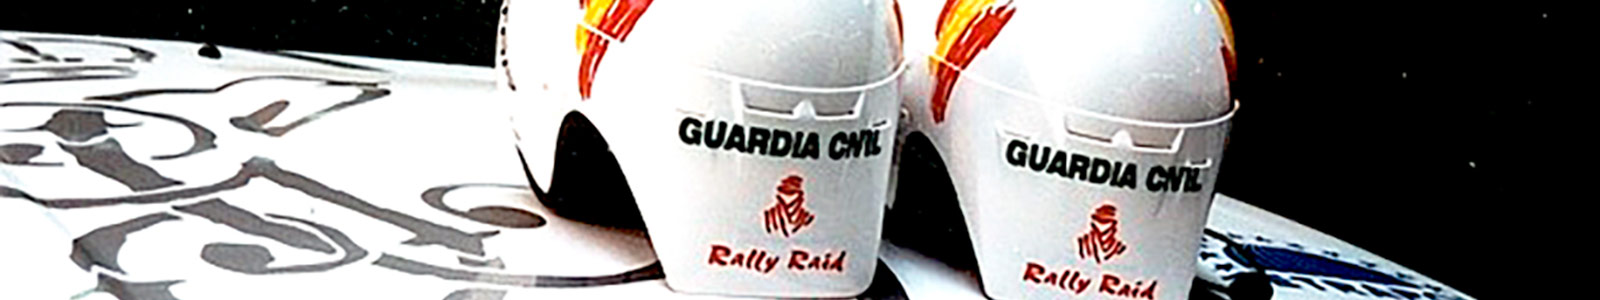 GUARDIA CIVIL Rally Raid. Aporte institucional.